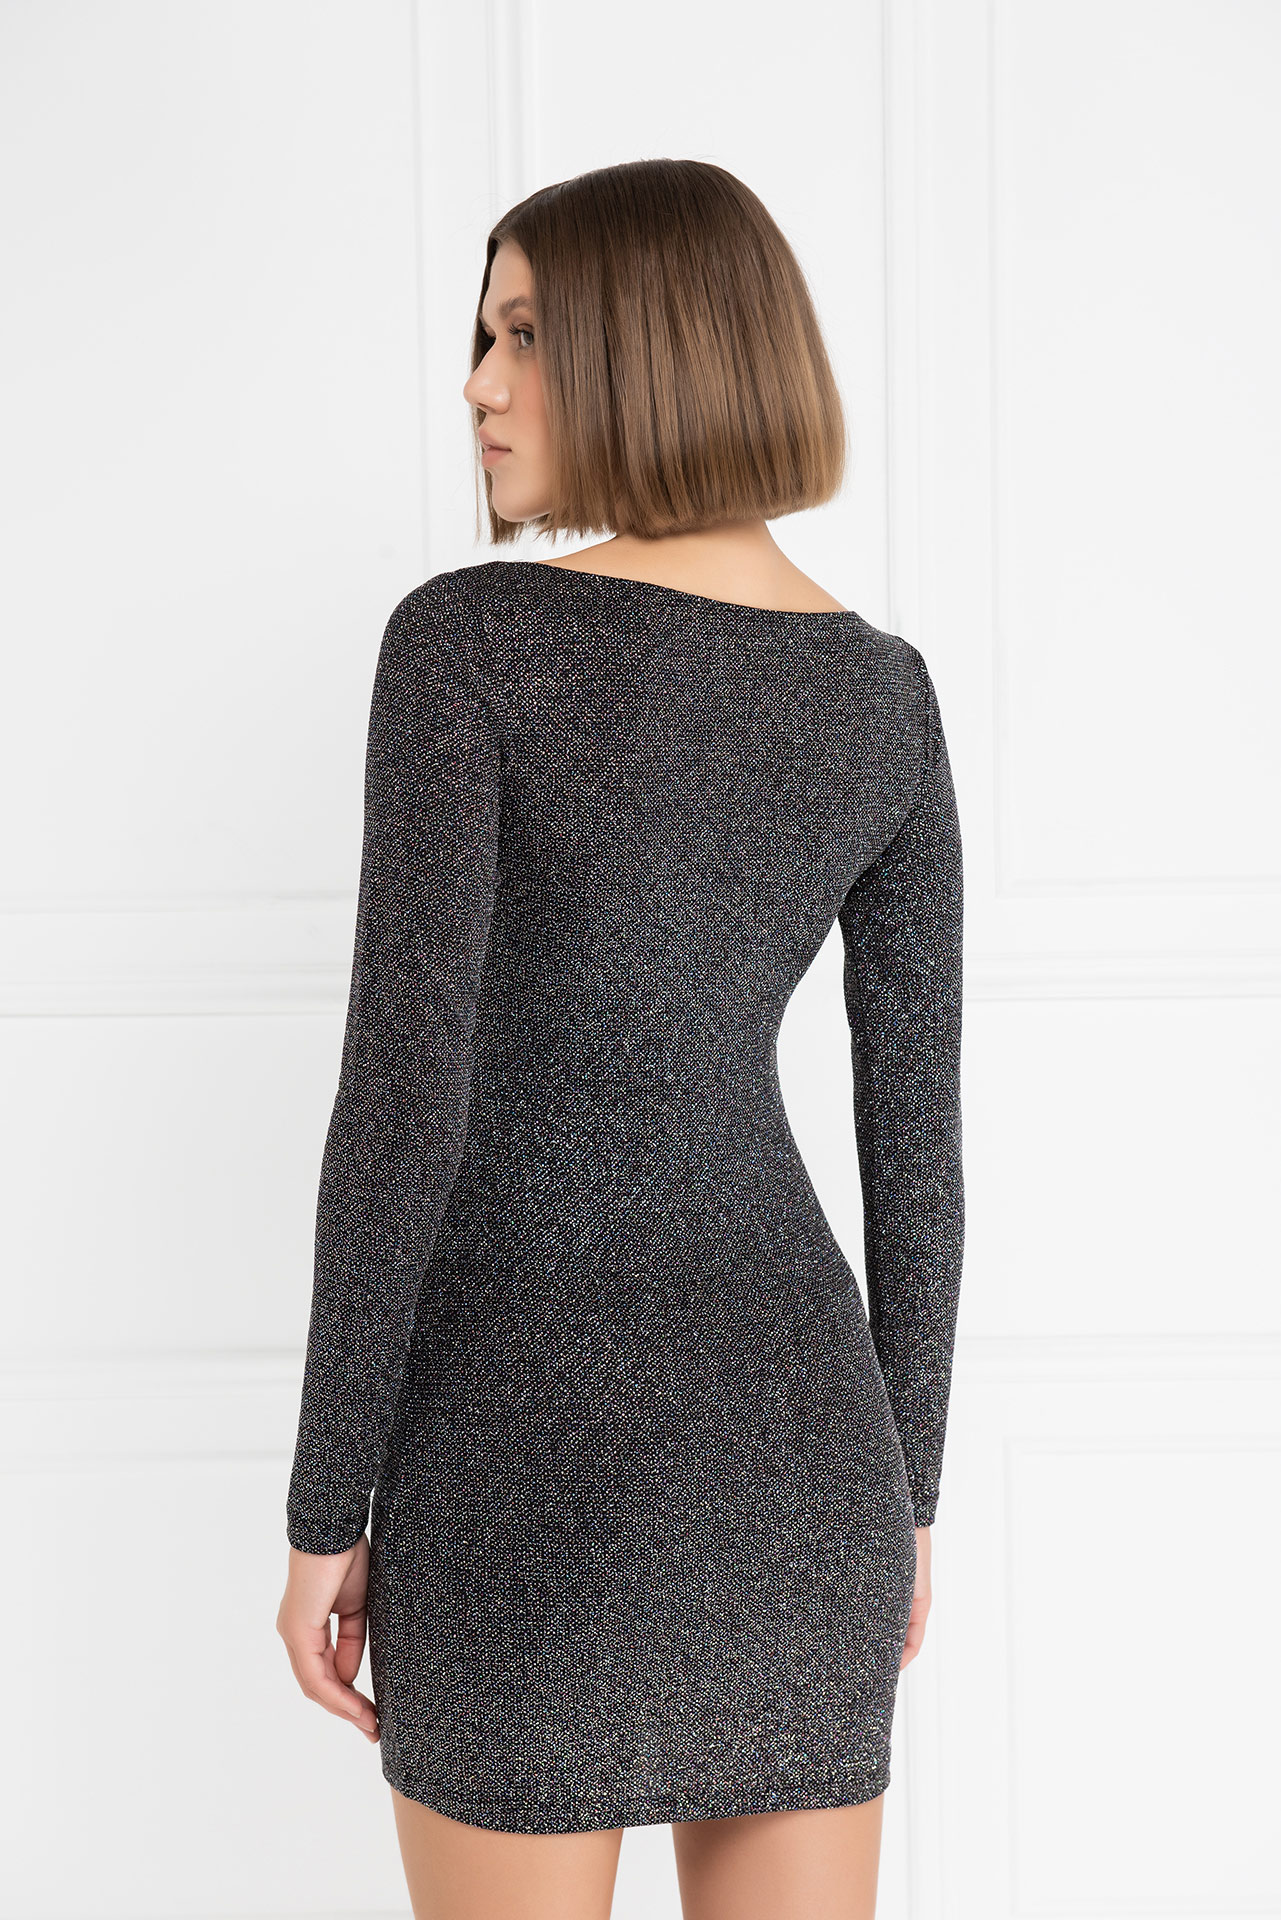 Wholesale Glittery Black-Silver Cut Out Front Mini Dress